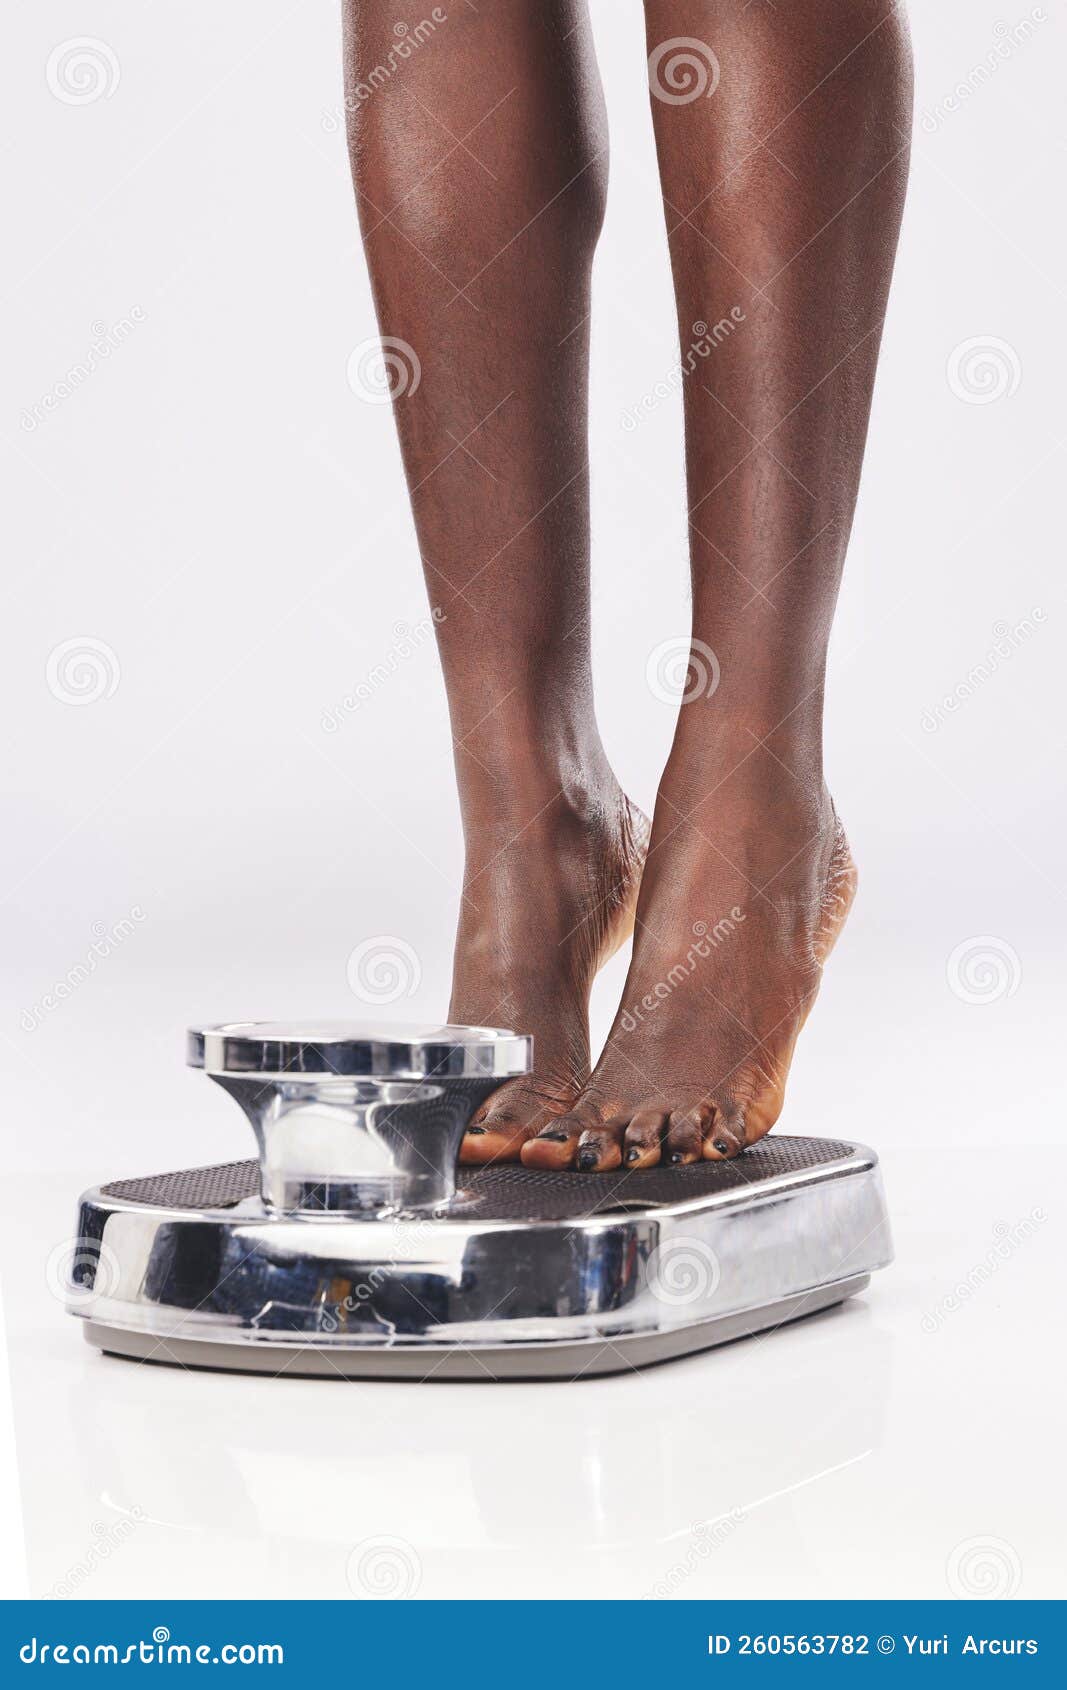 https://thumbs.dreamstime.com/z/black-woman-feet-scale-to-measure-weight-diet-weightloss-against-white-studio-back-mockup-foot-health-wellness-female-260563782.jpg